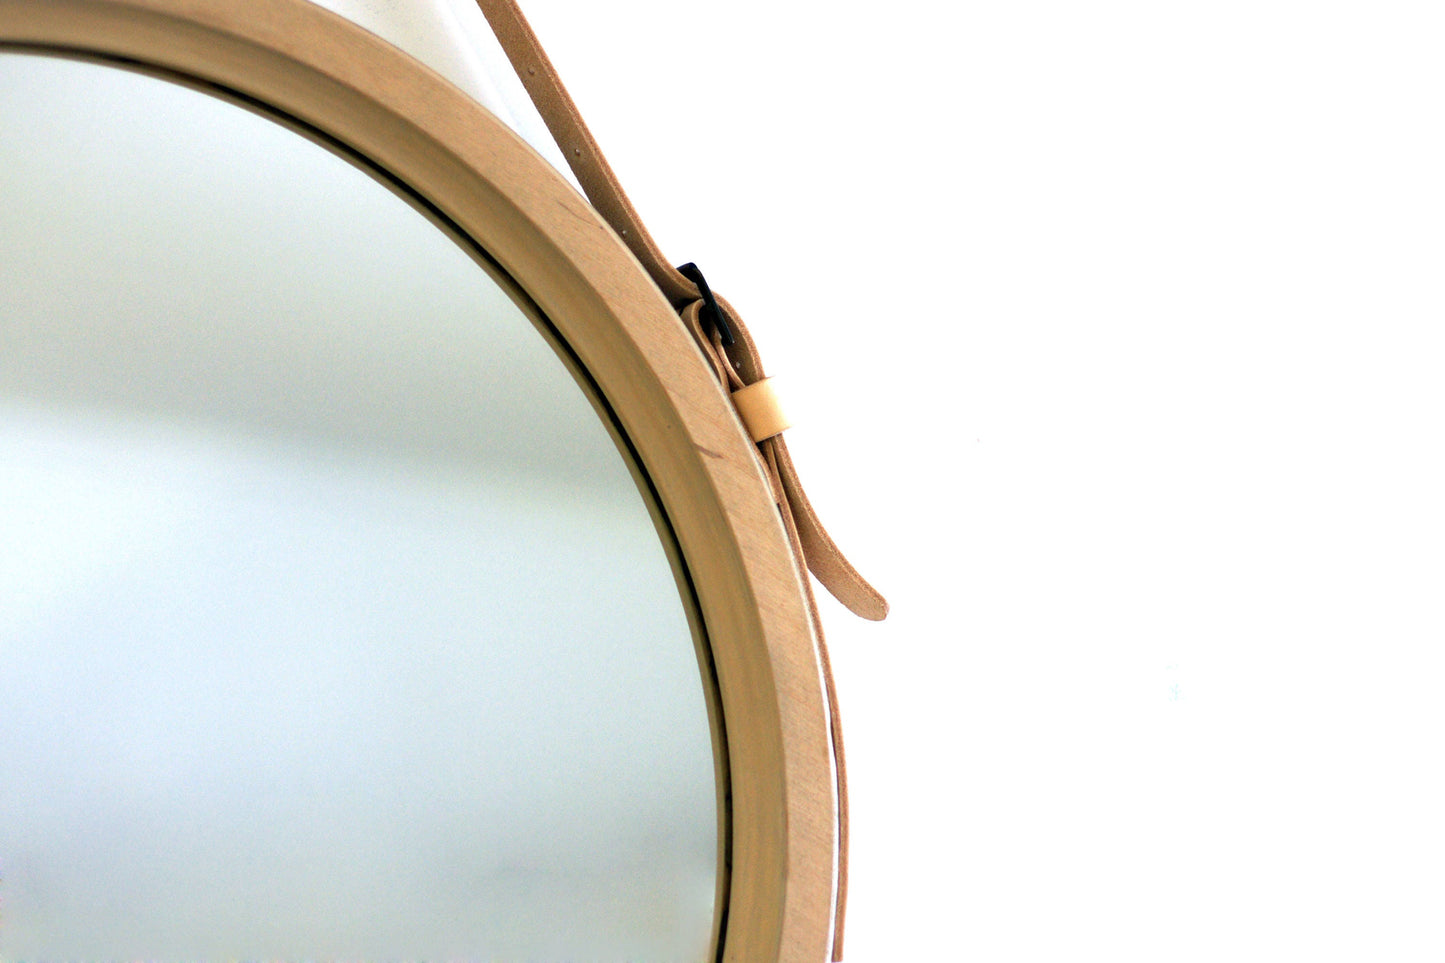 Round Mirror / Leather Circle Mirror / Scandinavian Style Mirror / Minimalist Modern Style / Strap Wall Mirror / Loft Style Mirror "Oslo"